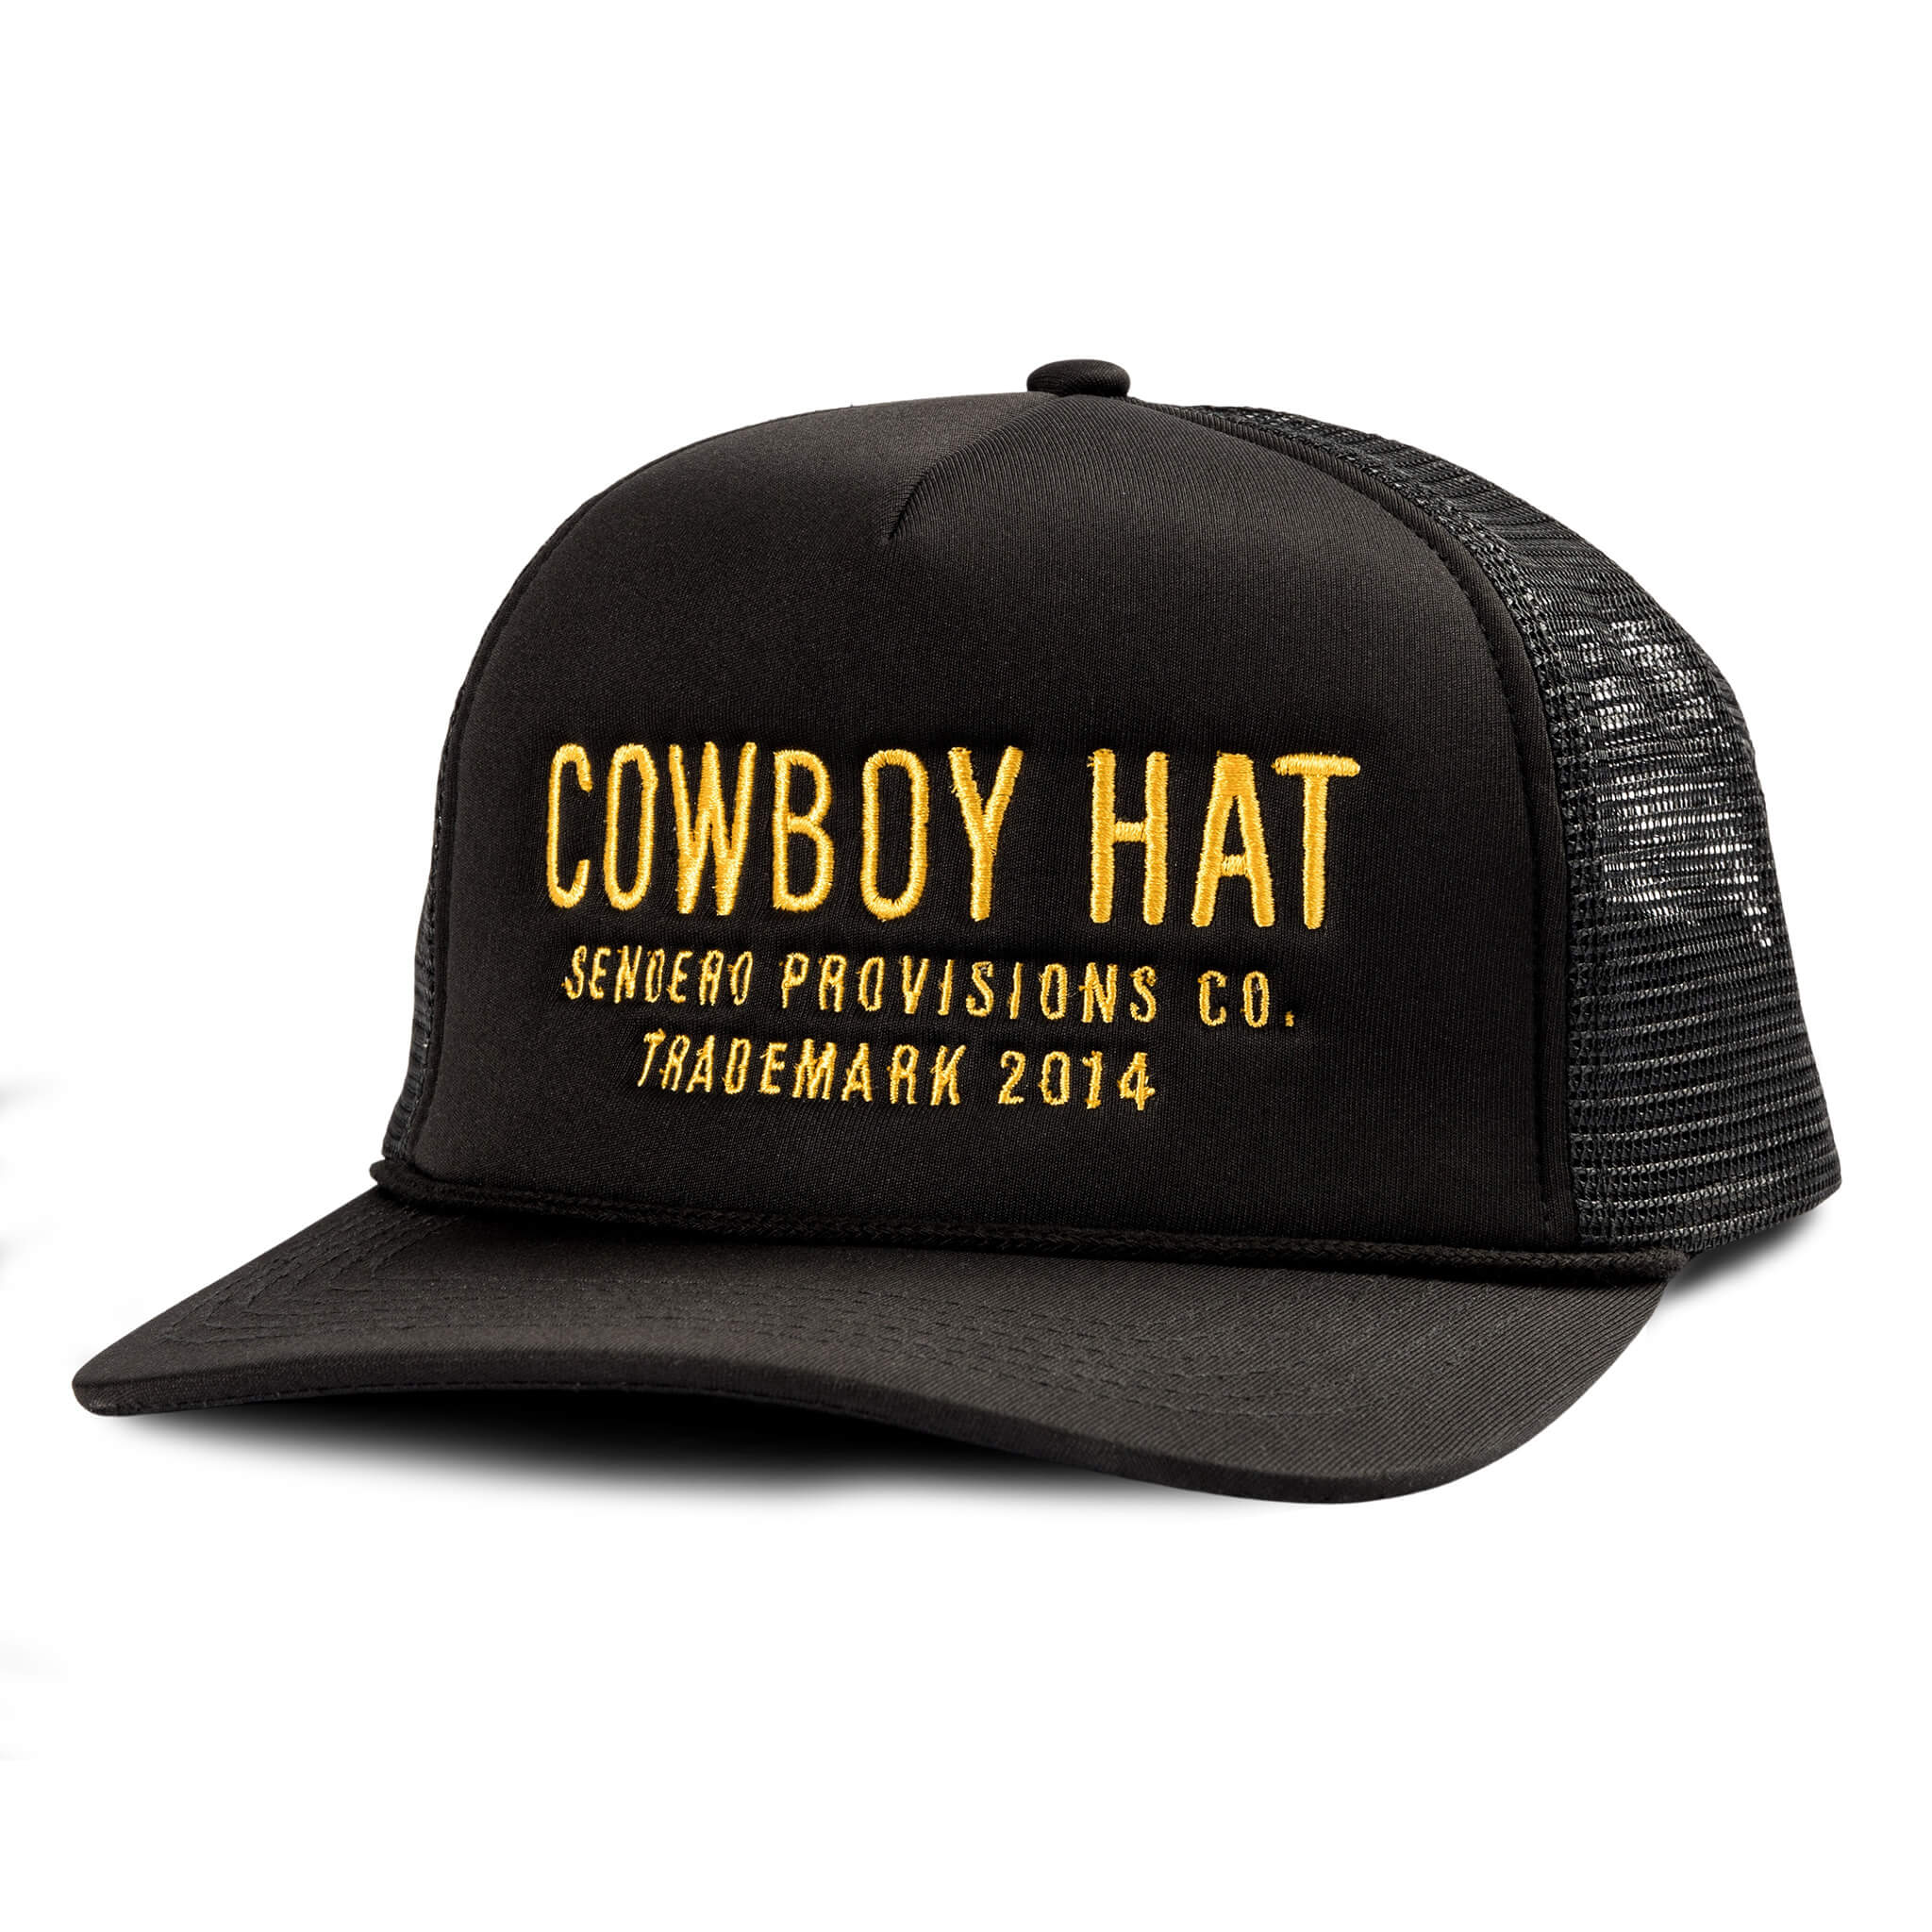 Cowboy Hat – Sendero Provisions Co.